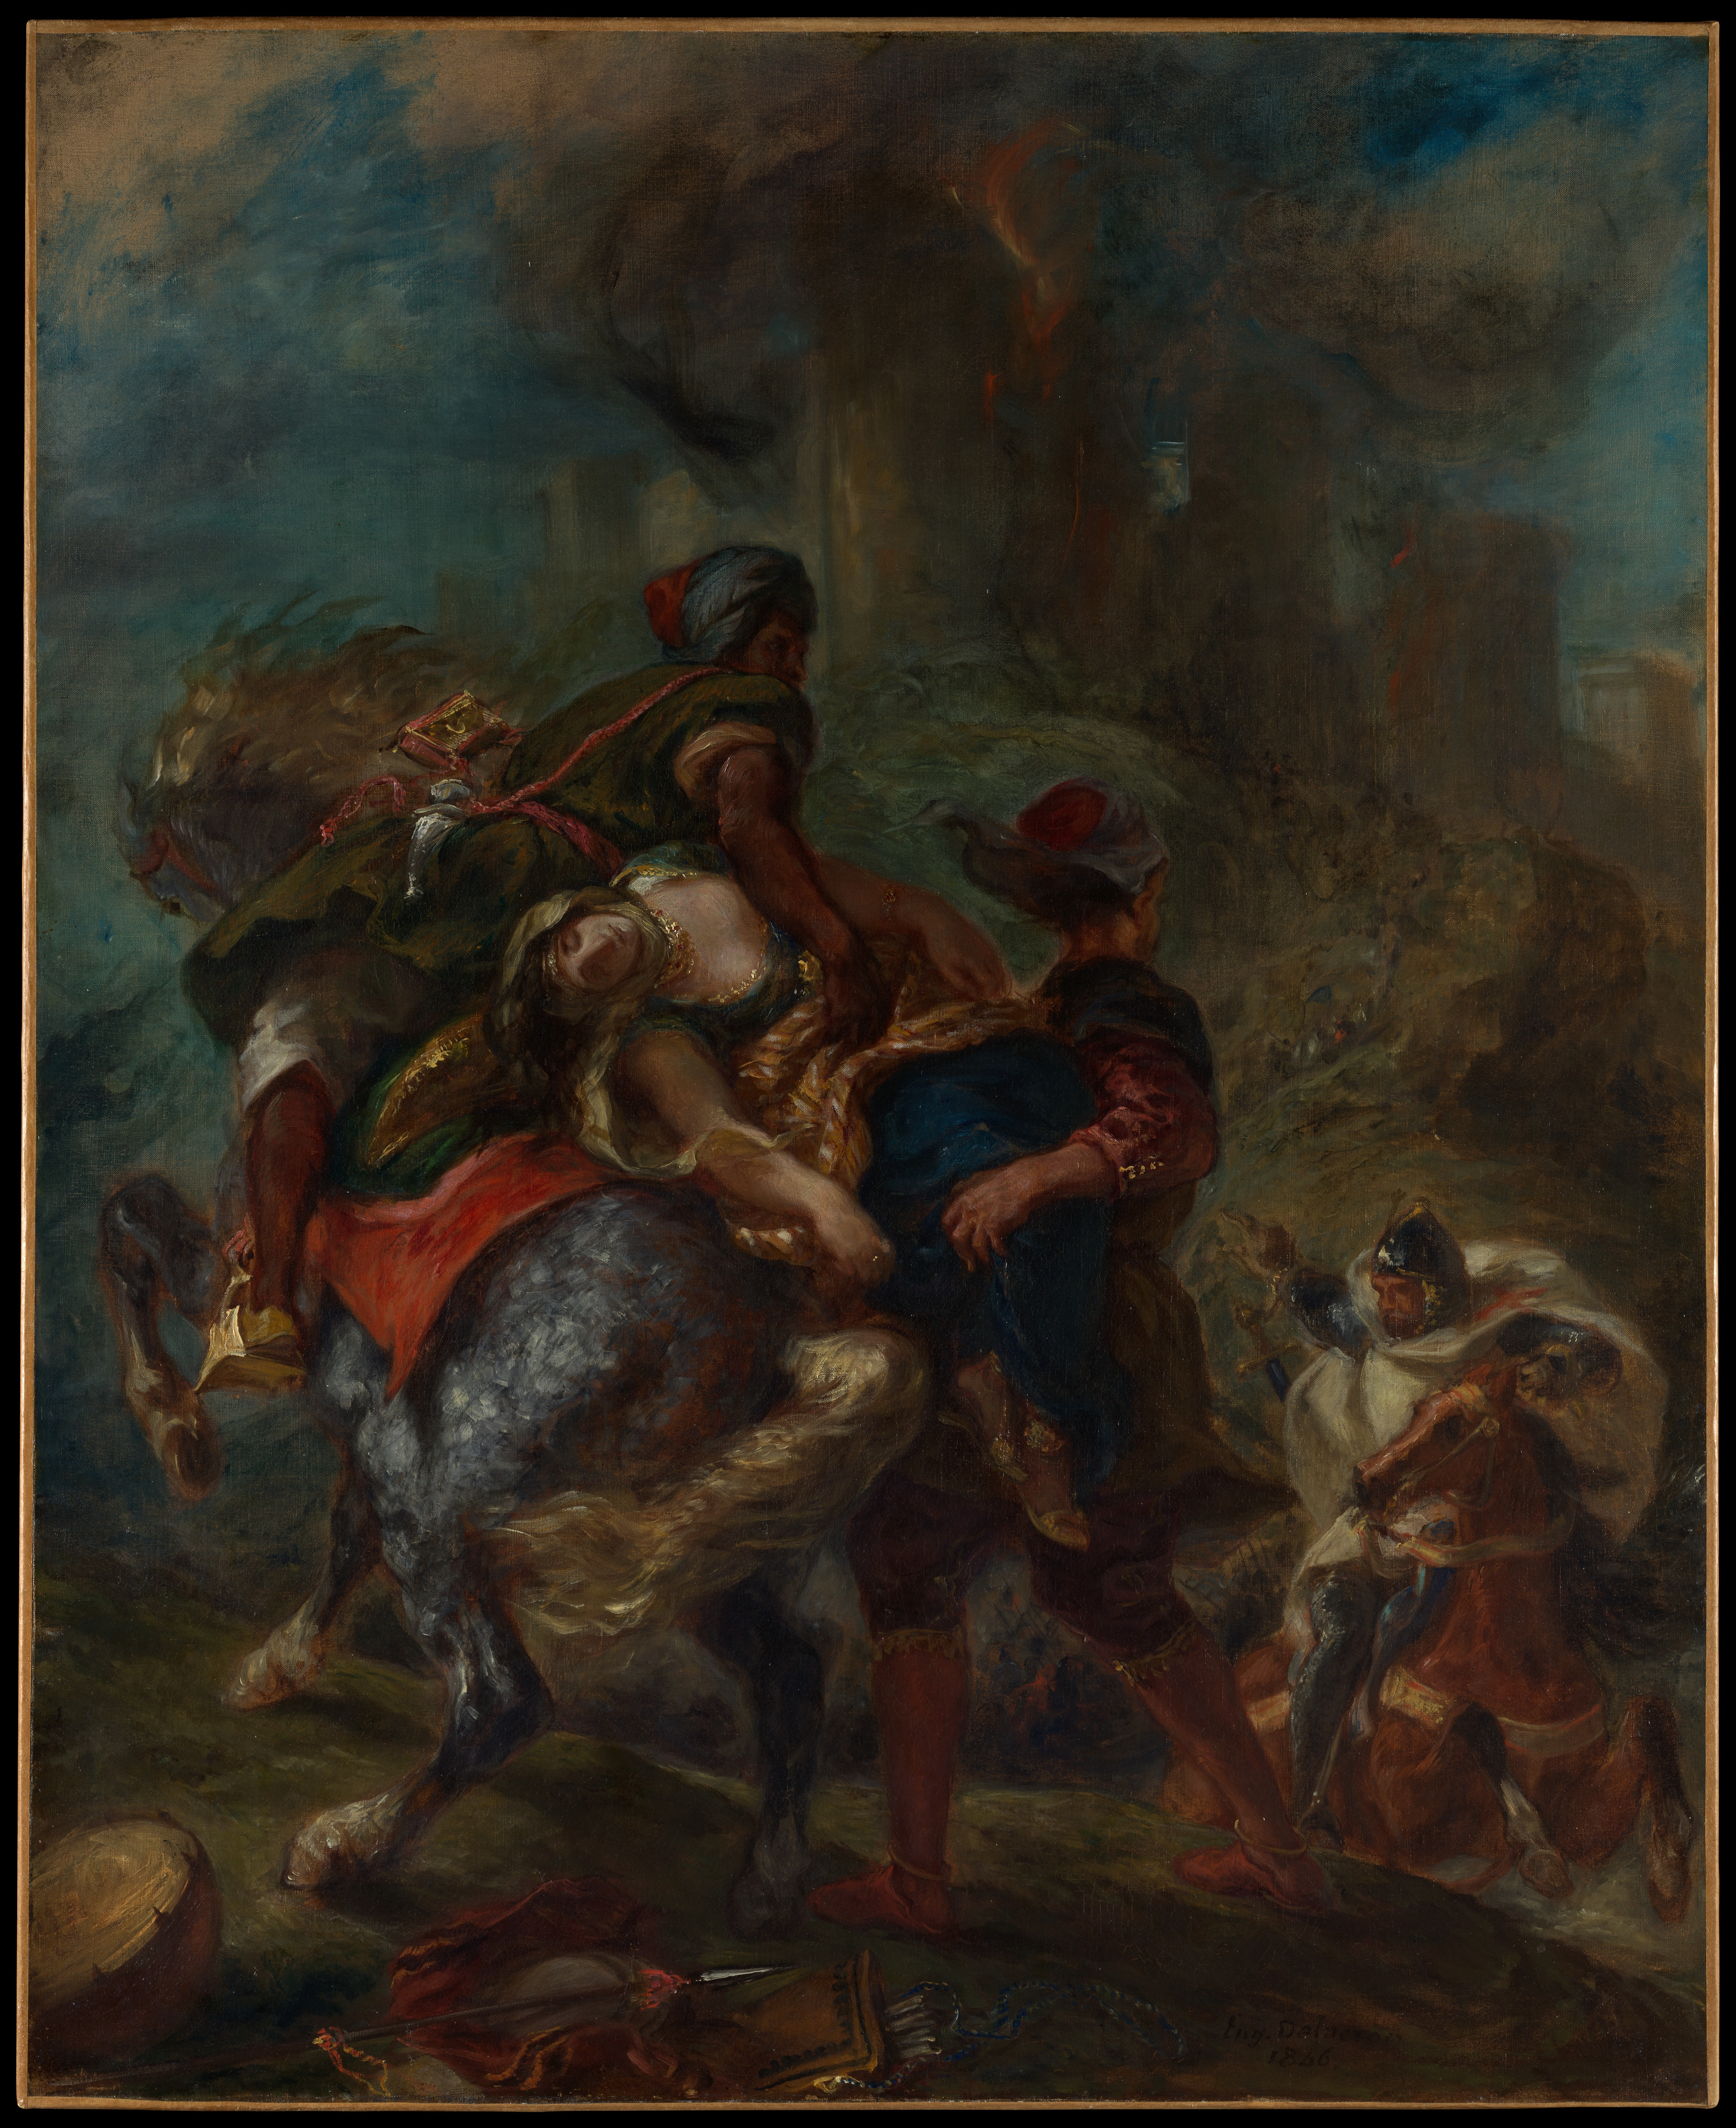 Die Entführung der Rebecca by Eugène Delacroix - 1846 - 100.3 x 81.9 cm Metropolitan Museum of Art